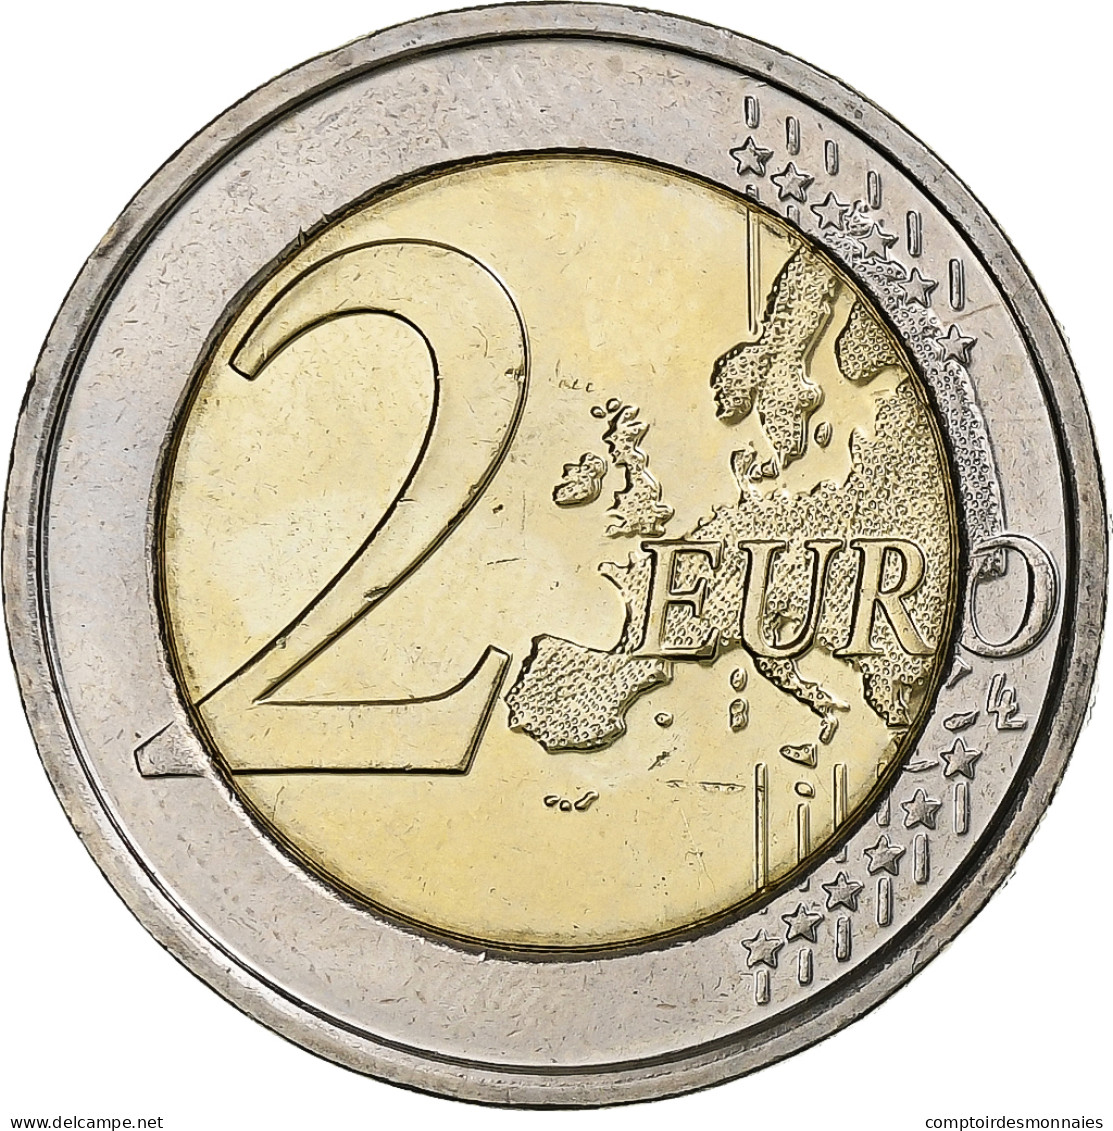 Belgique, 2 Euro, 2013, INSTITUT MÉTÉOROLOGIQUE, SPL, Bimétallique - Belgium